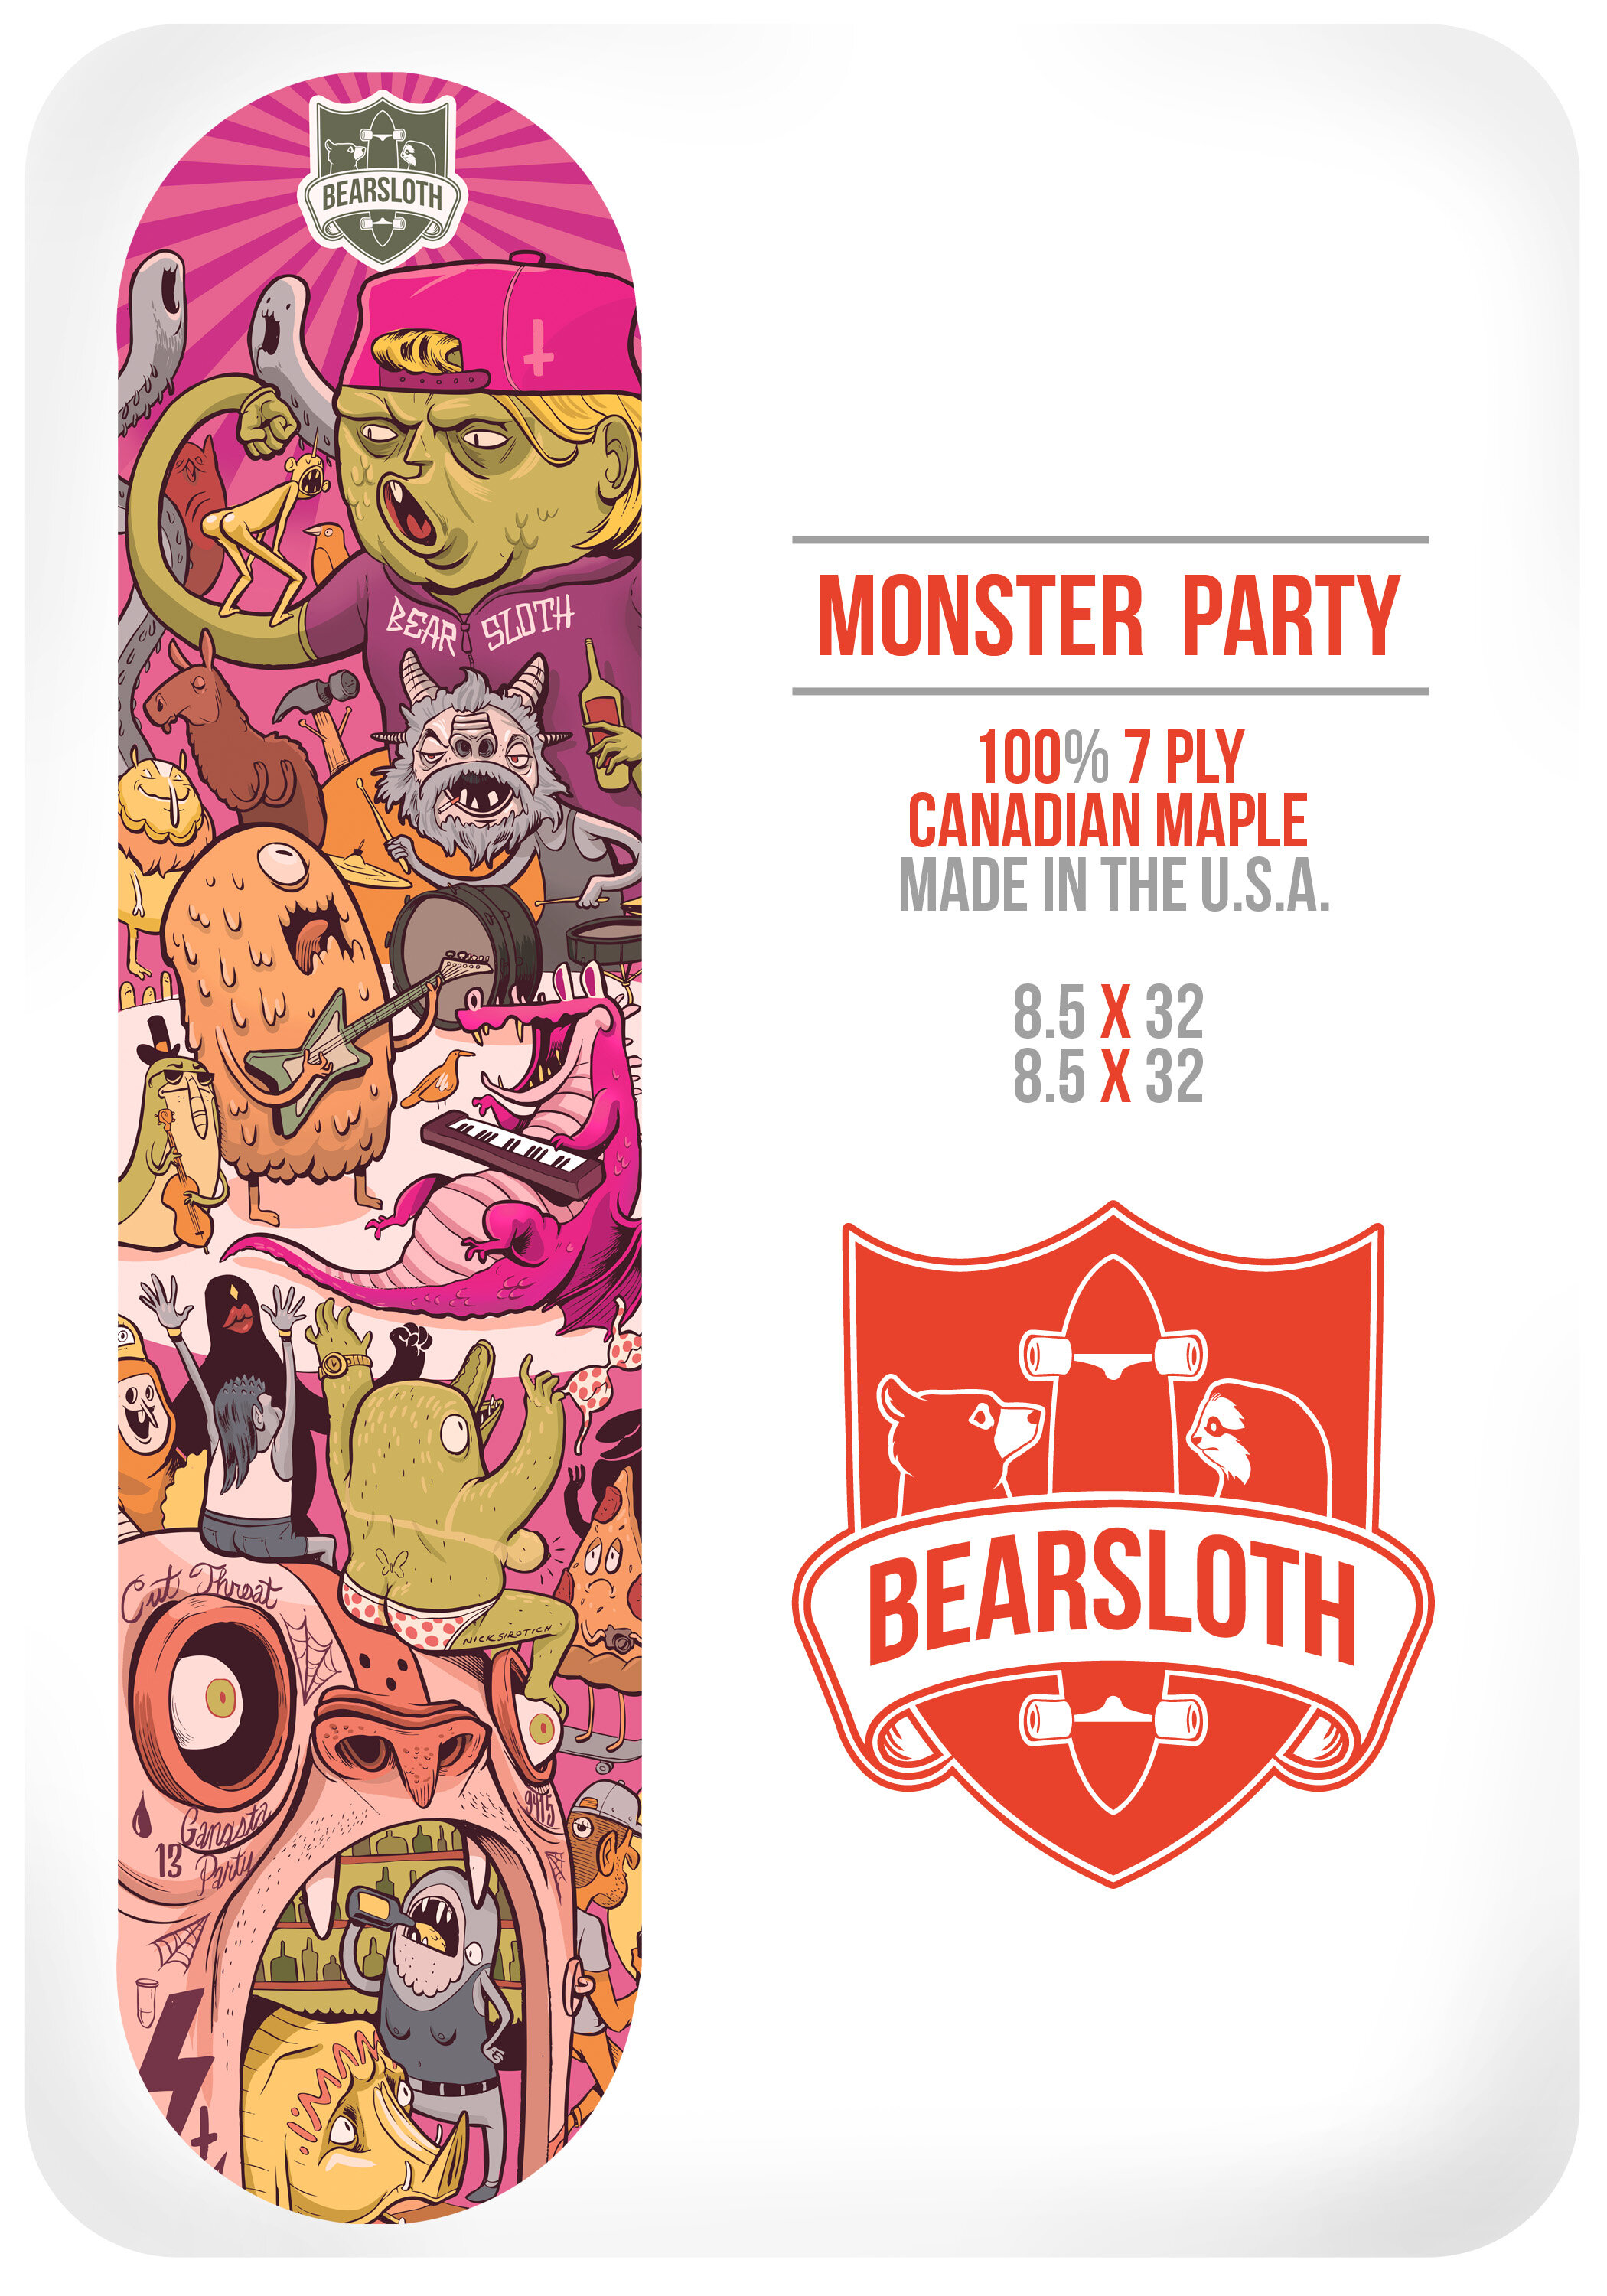 Bearsloth Monster Party Promo.jpg